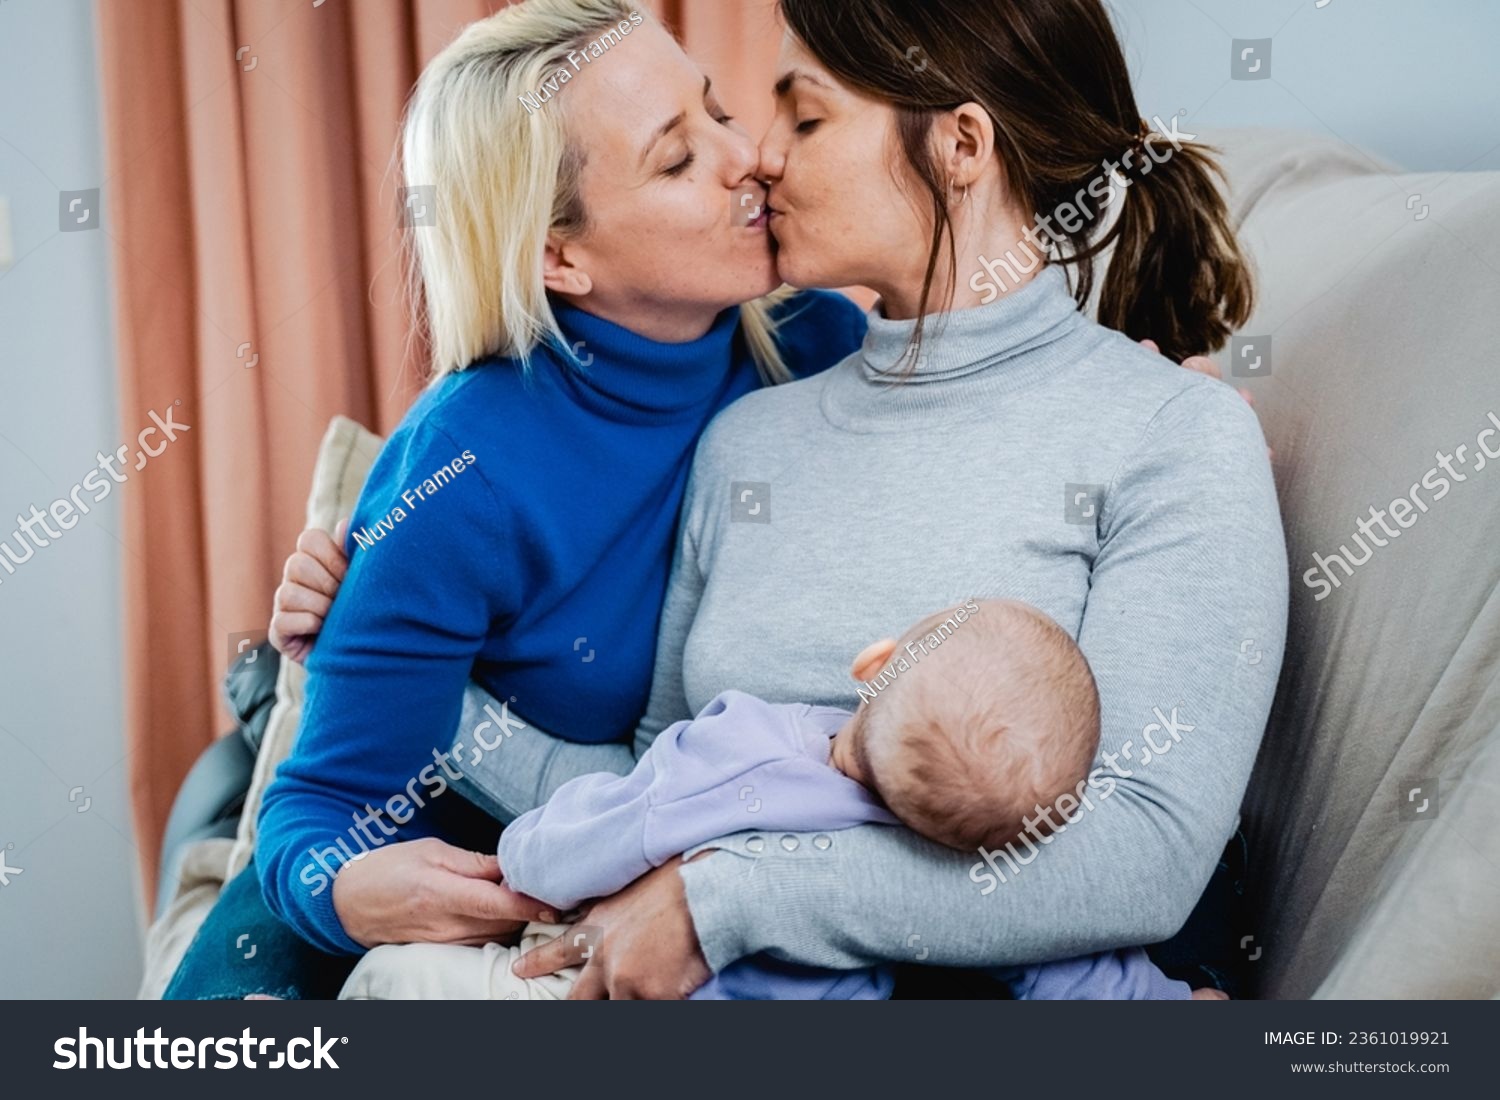 chita khan add photo lesbian mother daughter pics